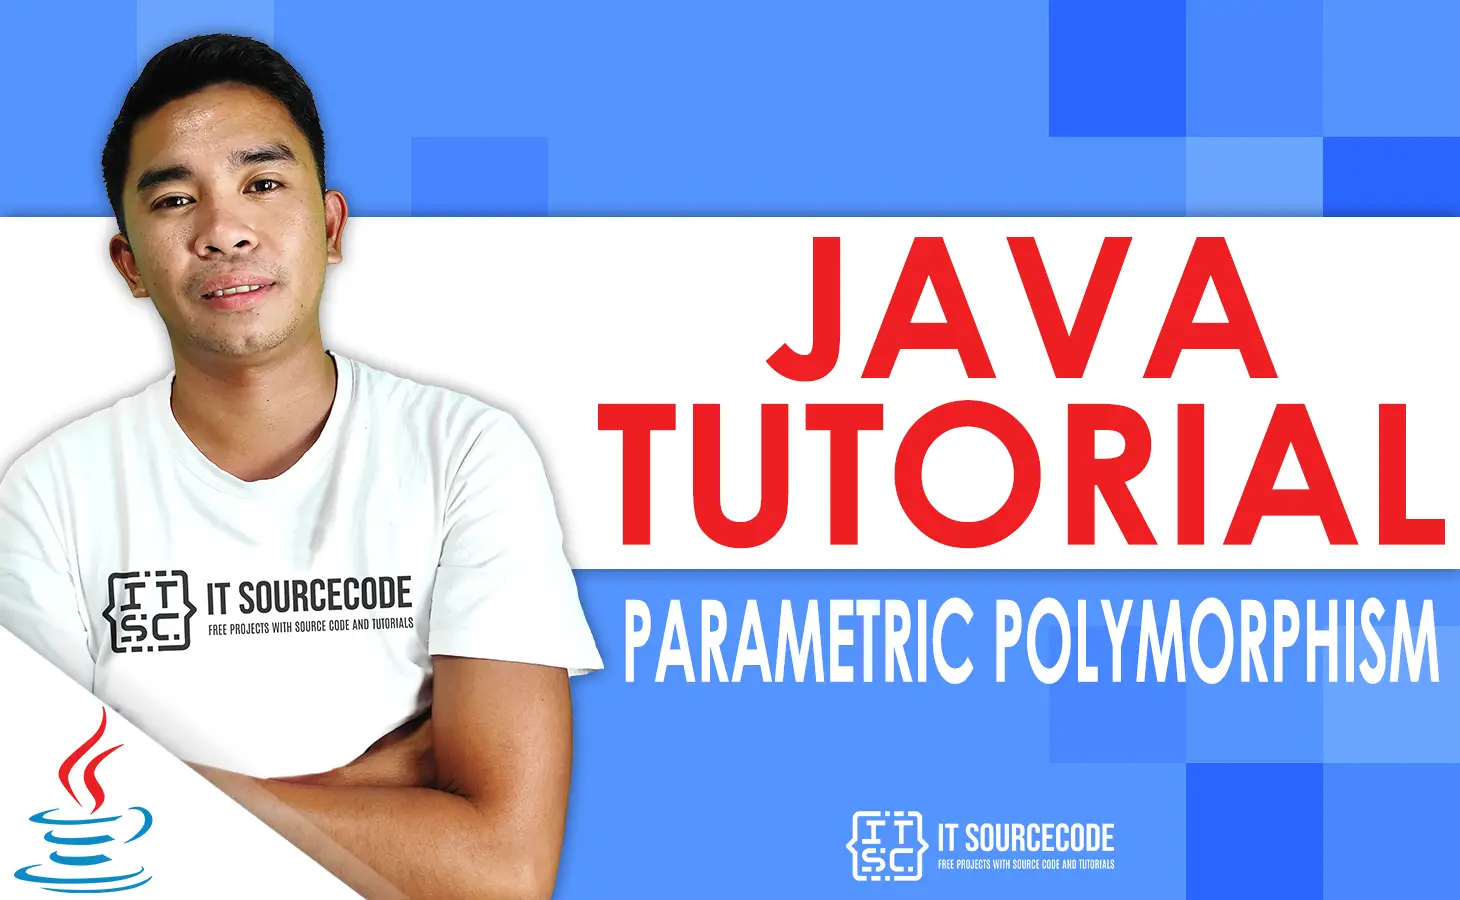 What Is Parametric Polymorphism In Java In Simple Mean